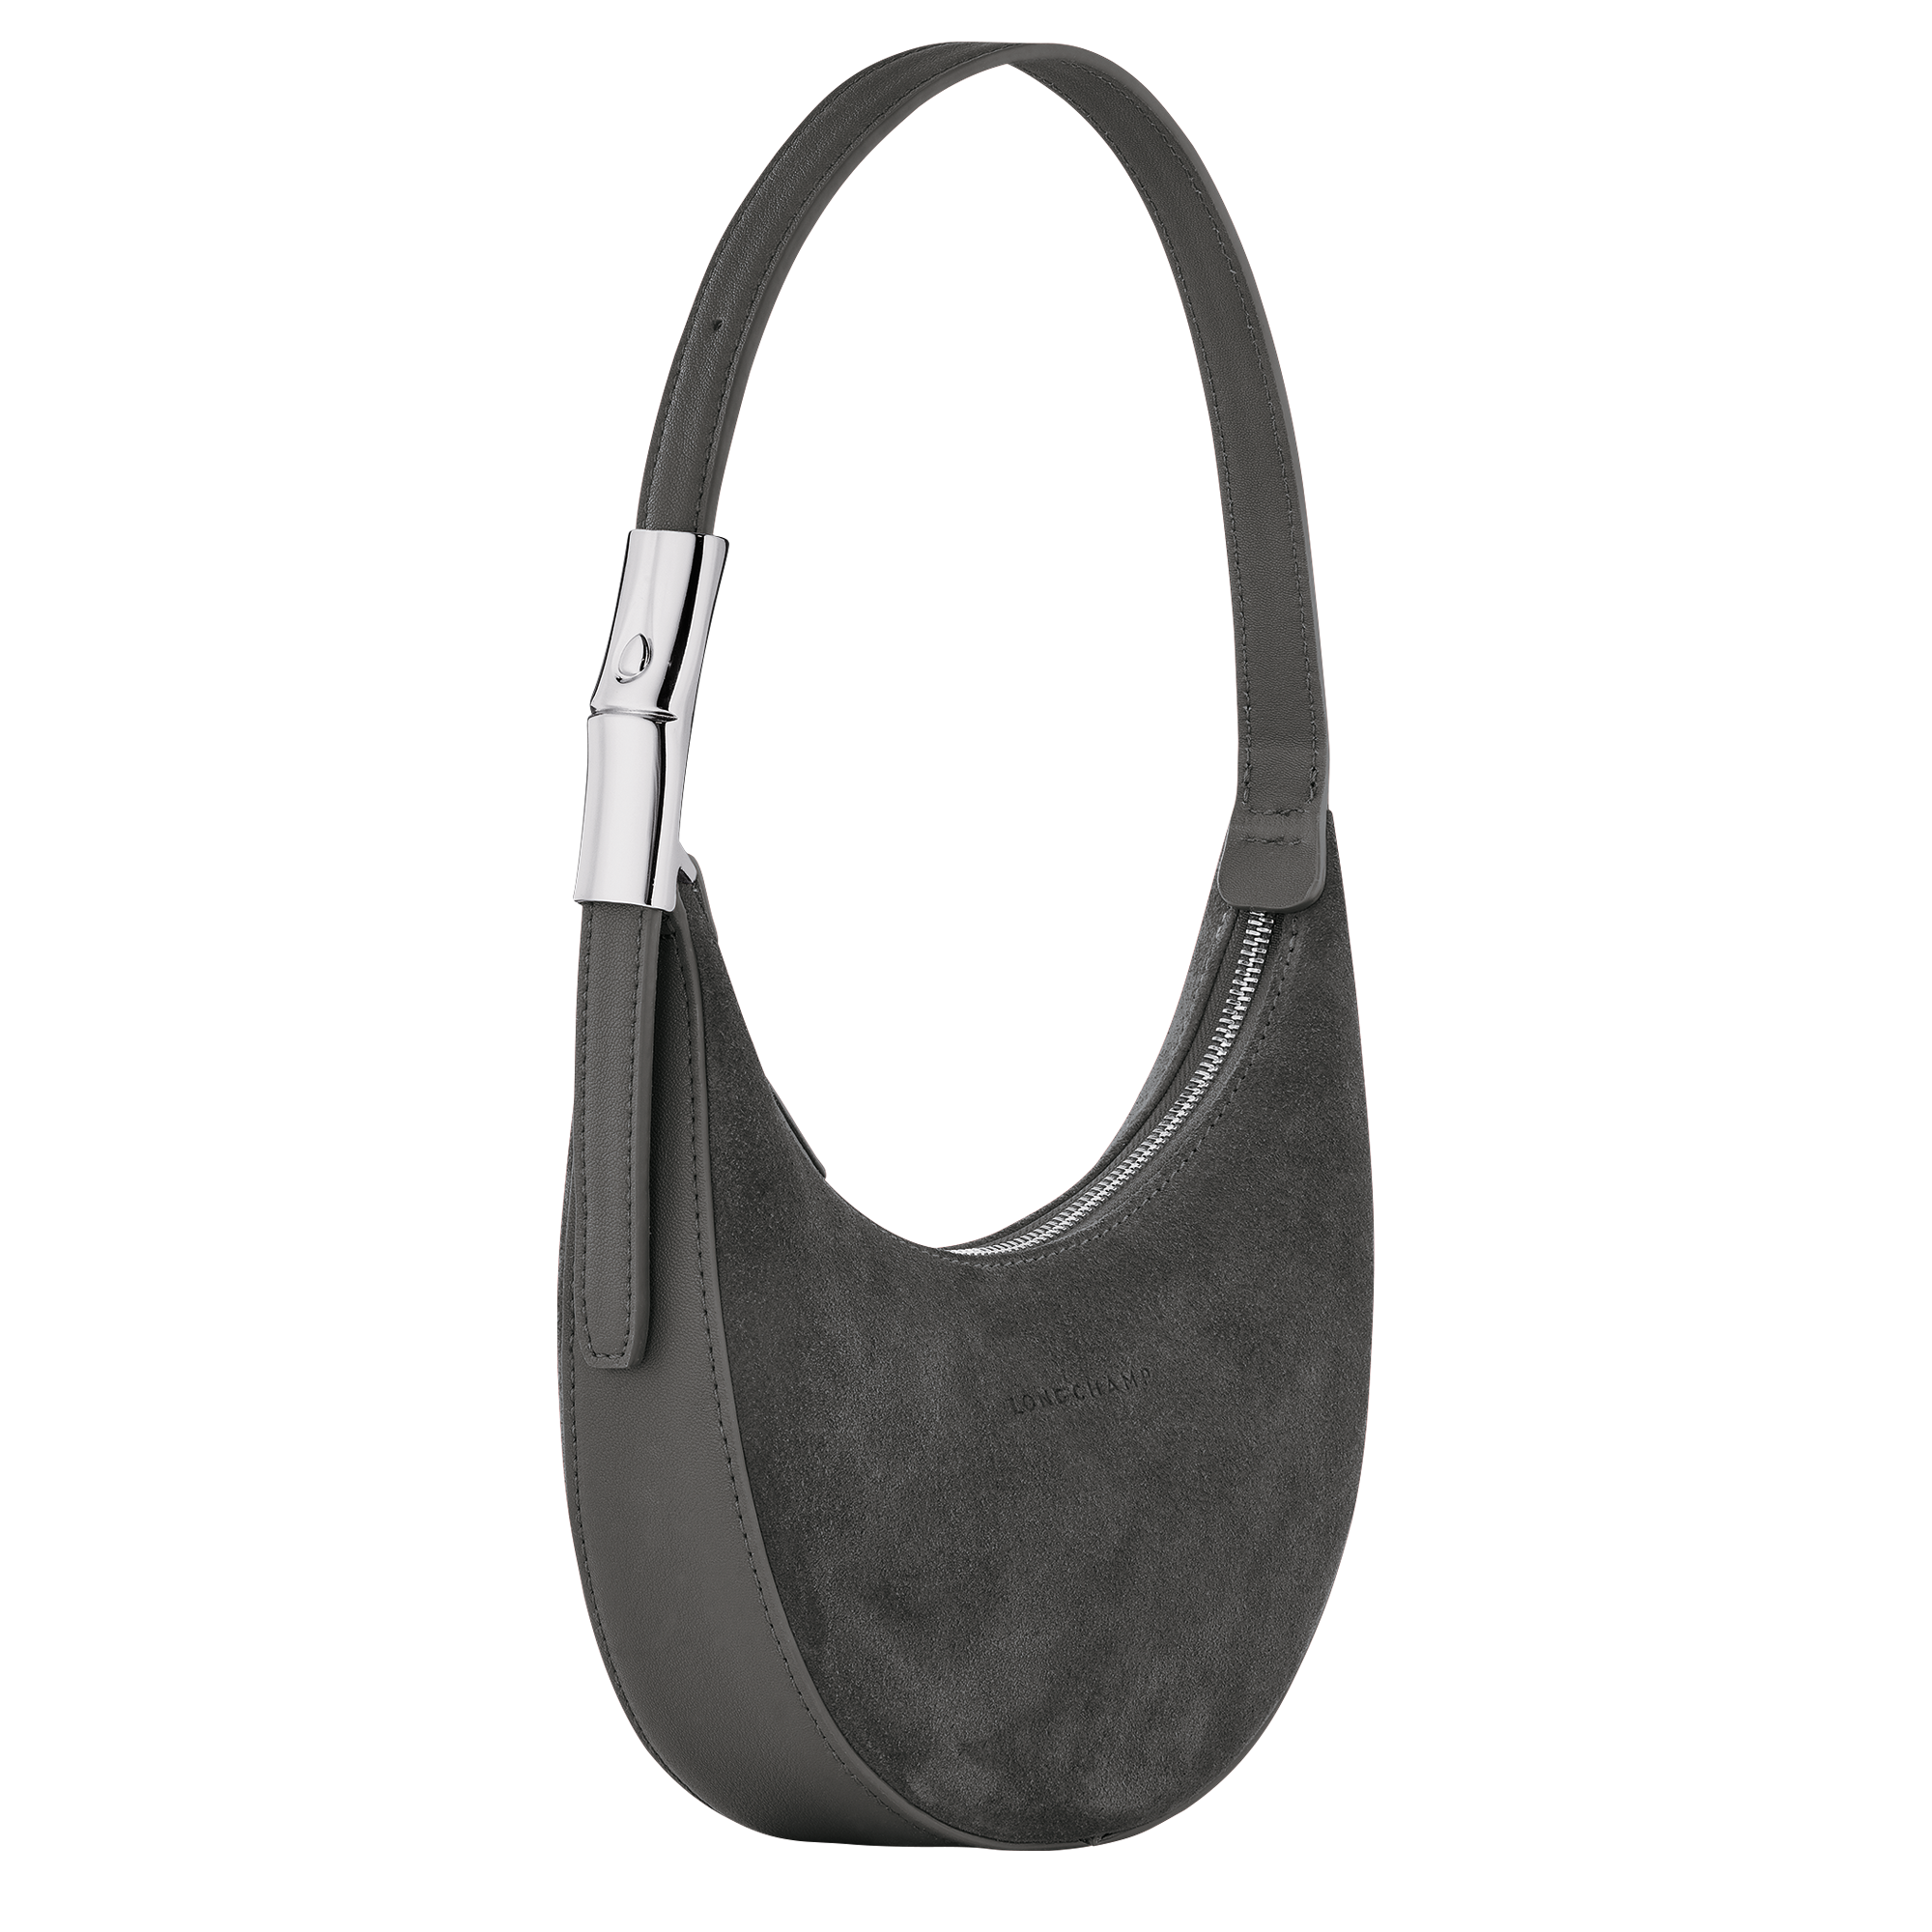 Longchamp Small Roseau Essential Hobo Bag in Black